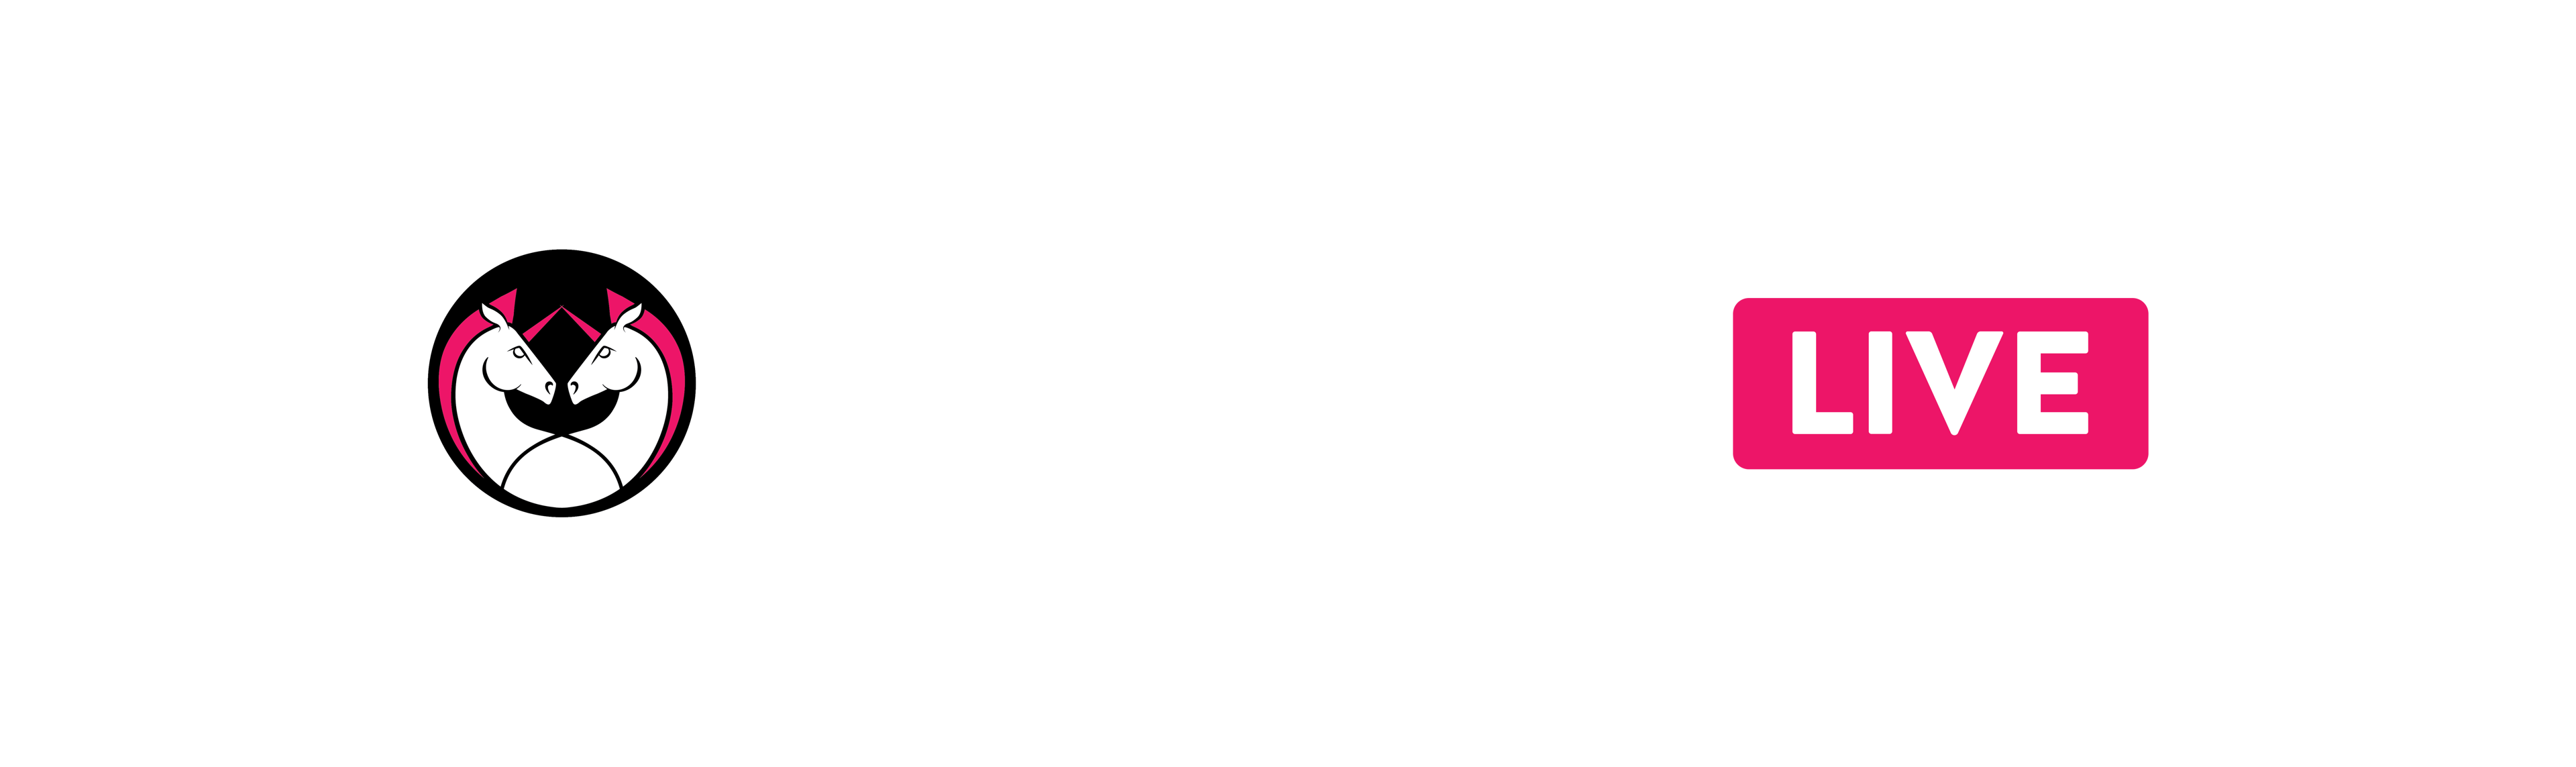 Unicorns.LIVE logo